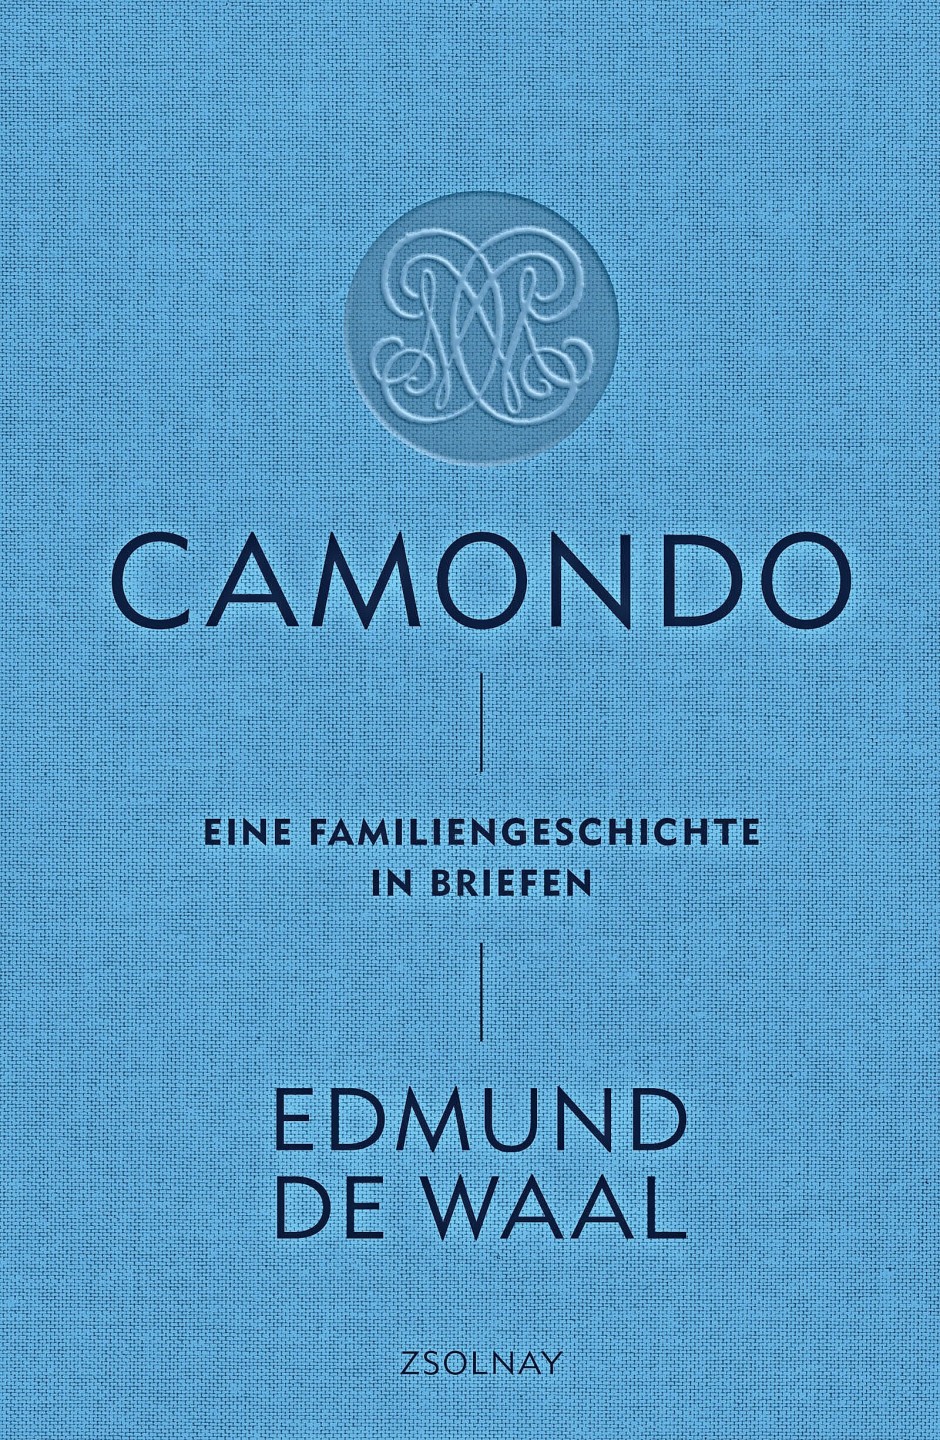 Photo gallery: Edmond de Valls Letter - Novel "Camondo" - Photo 3 of 3